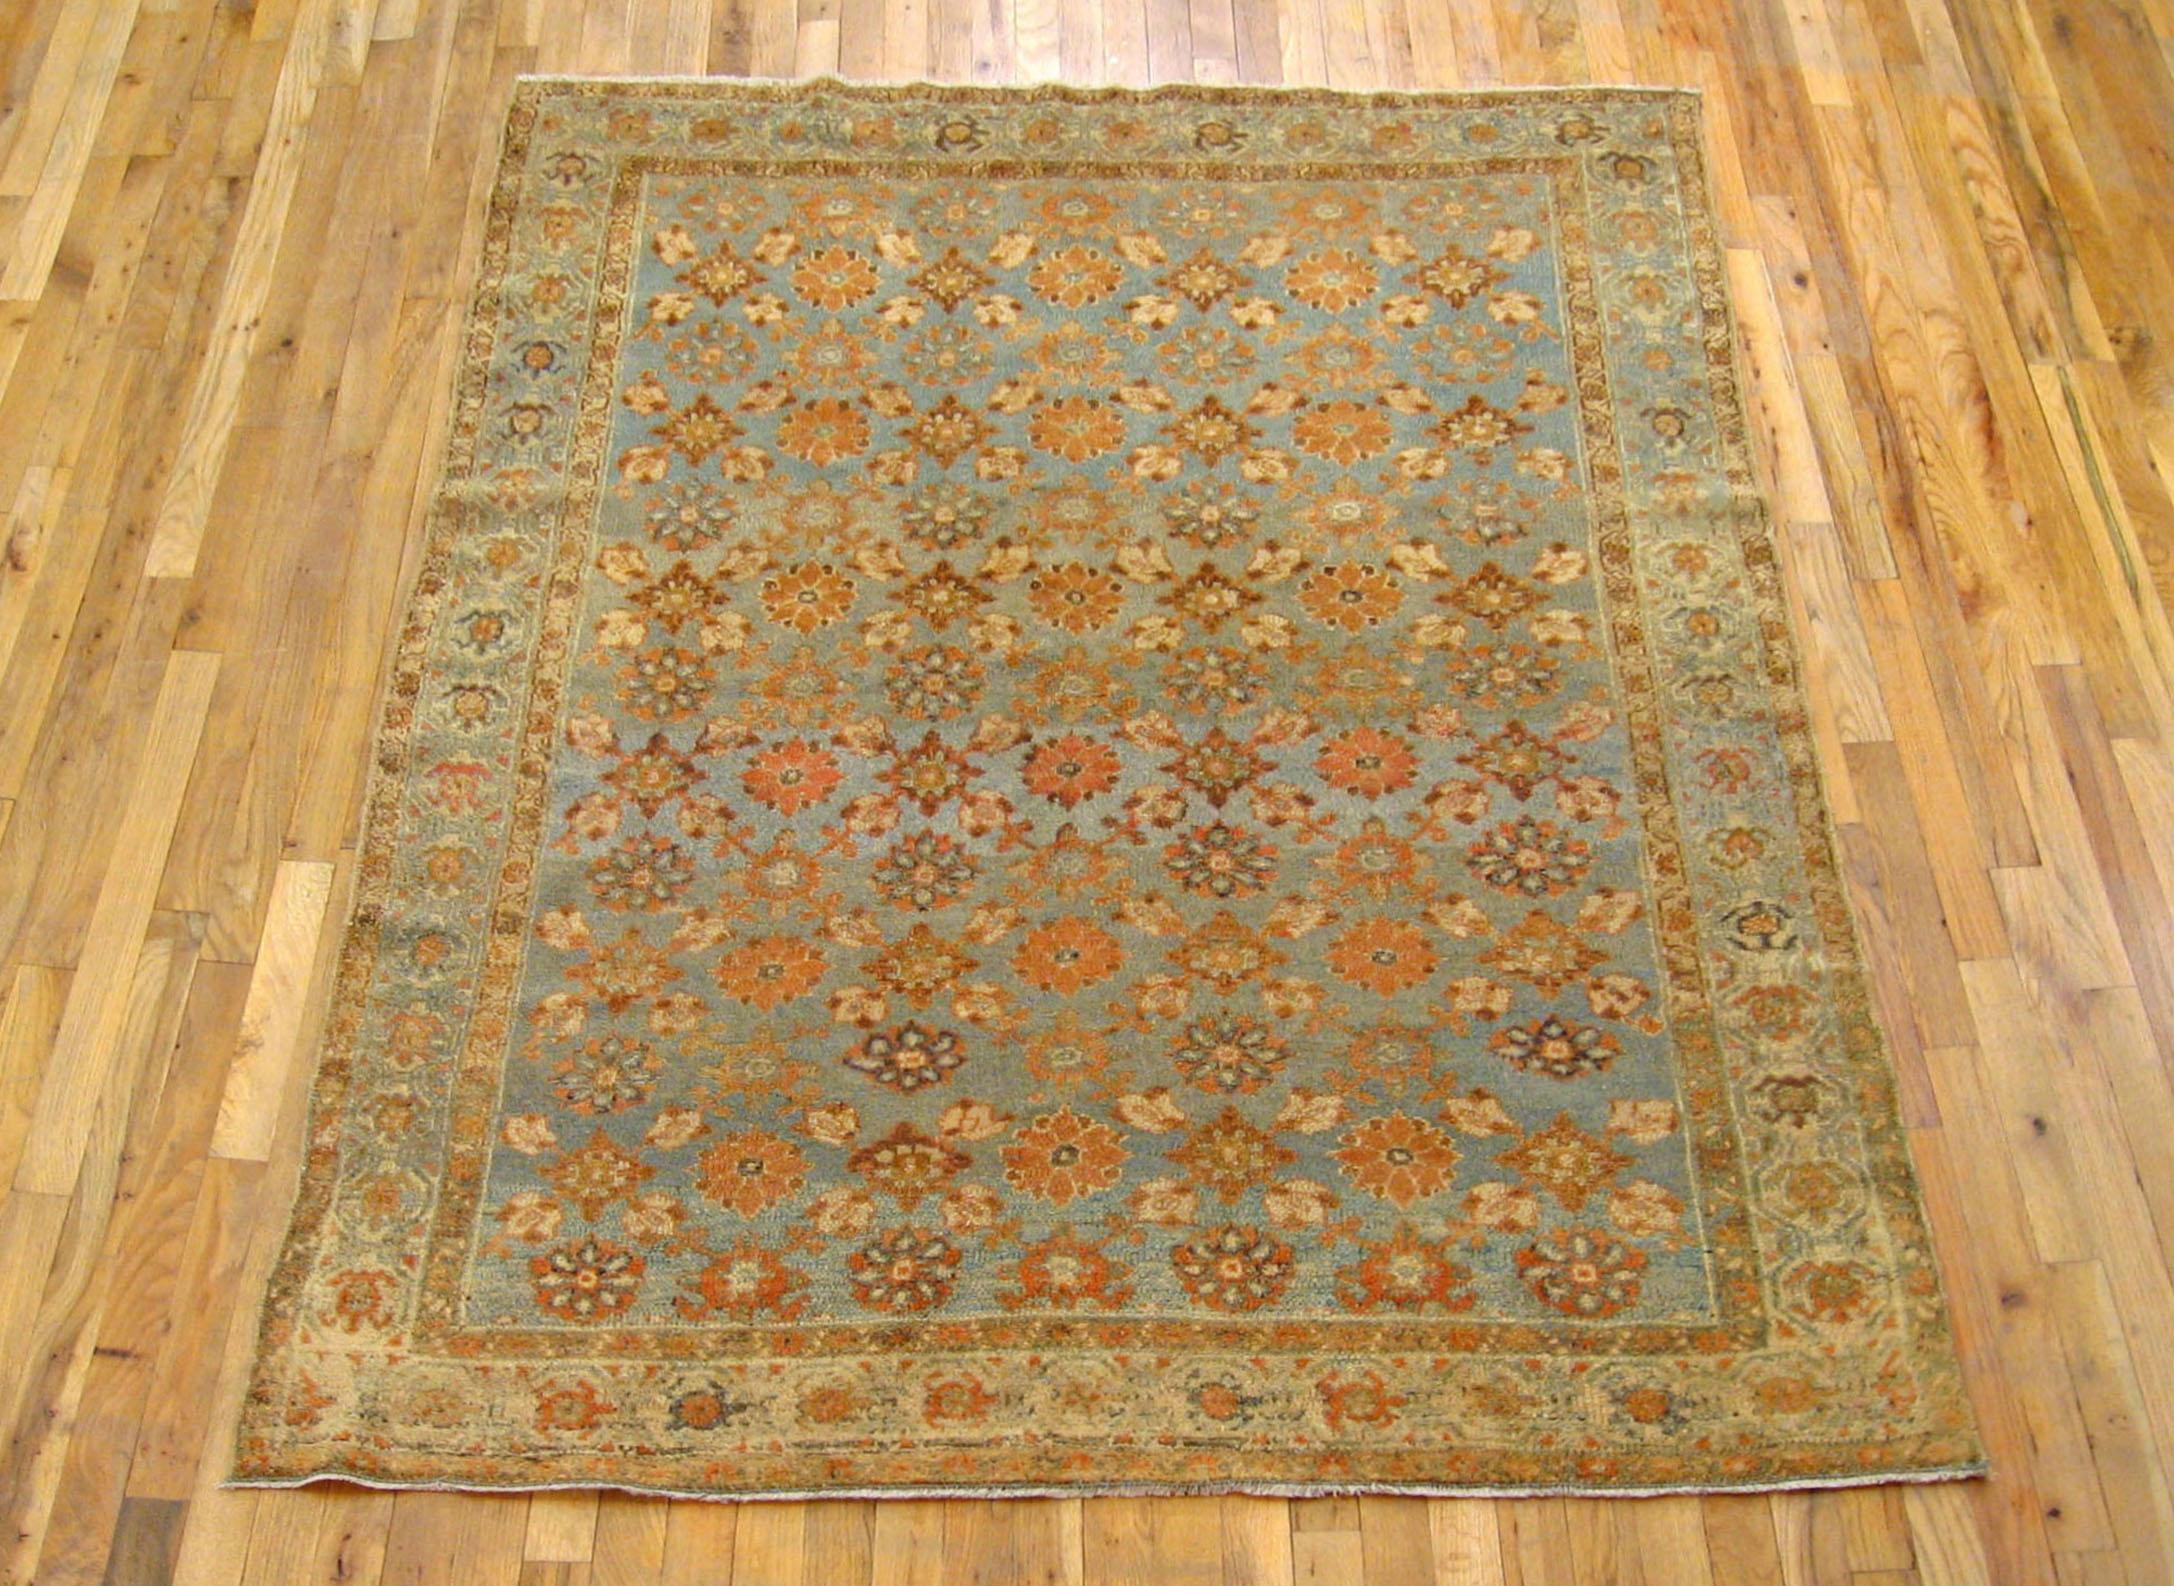 Antique Northwest Persian Carpet, Small size, size 6'9